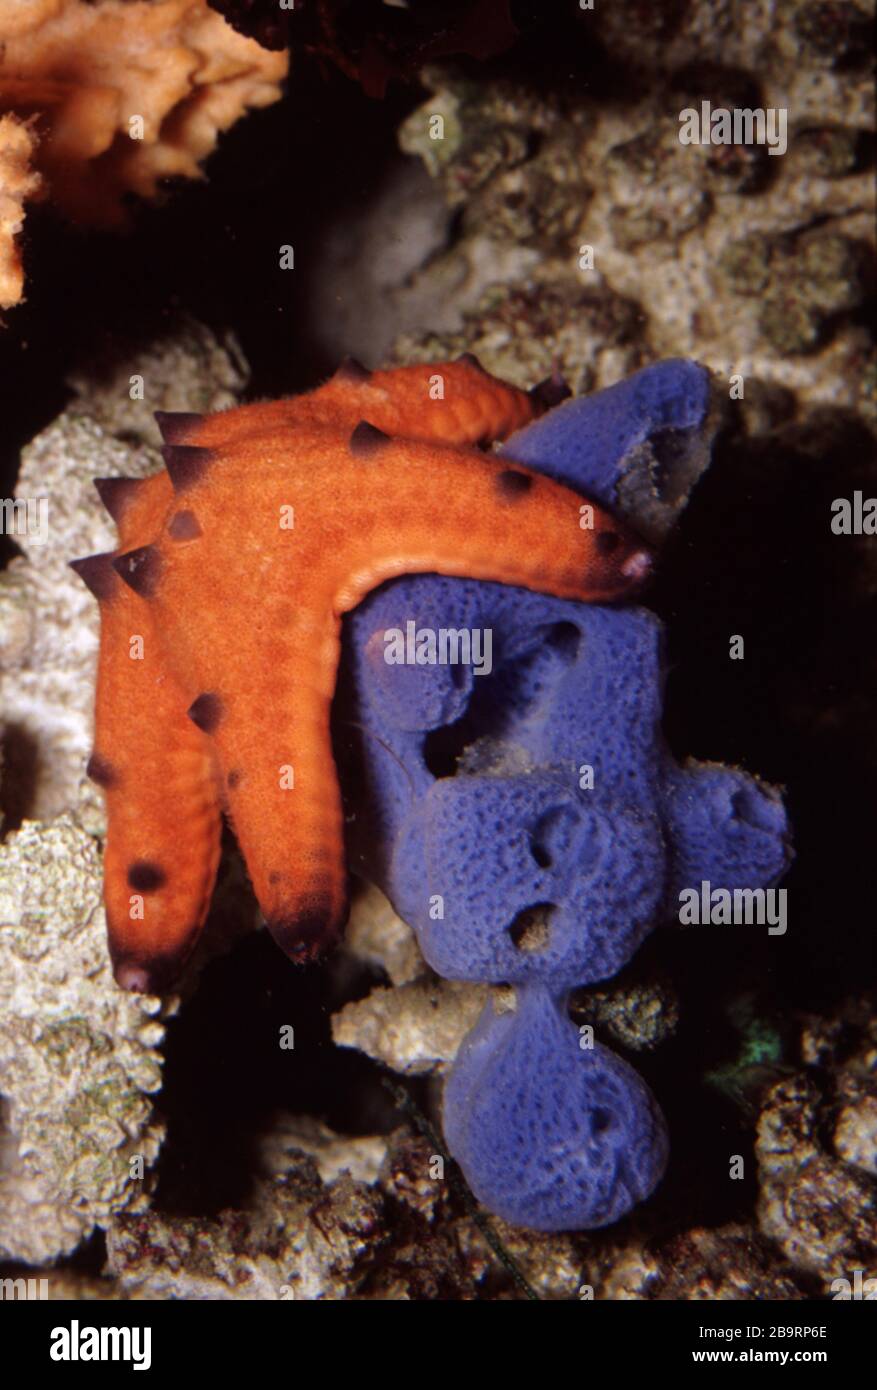 Knob sea star (Pentaceraster regulus) feeding a Blue sponge (Haliclona caerulea) Stock Photo